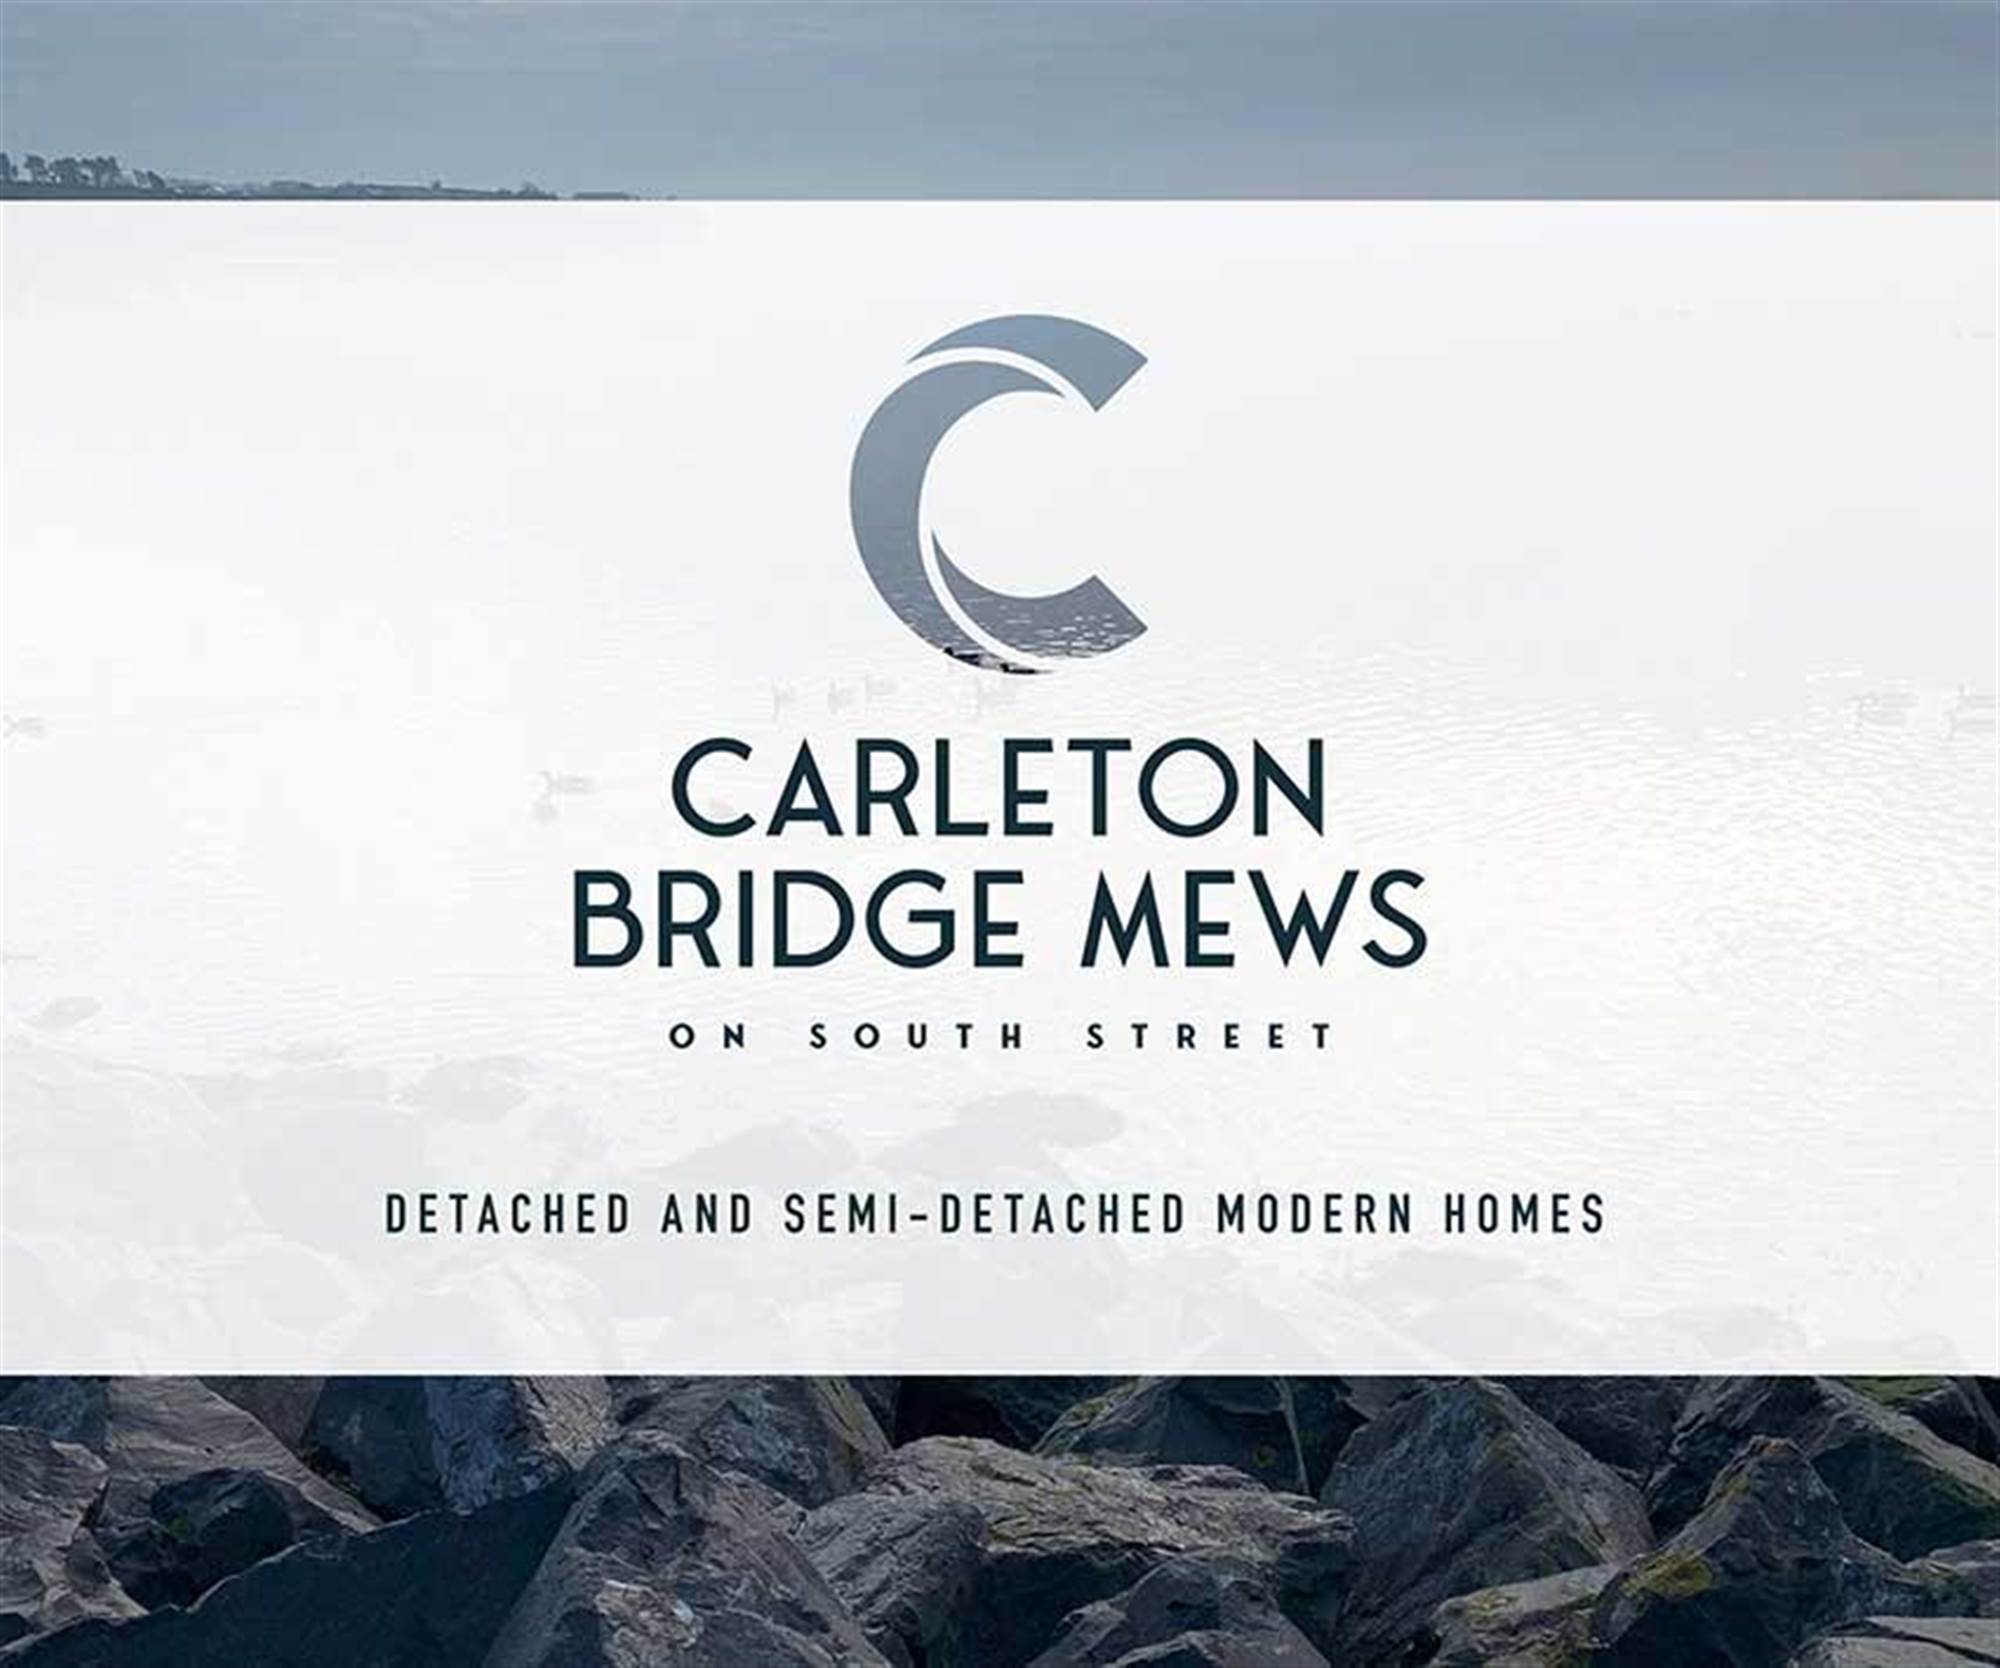 15 Carleton Bridge Mews